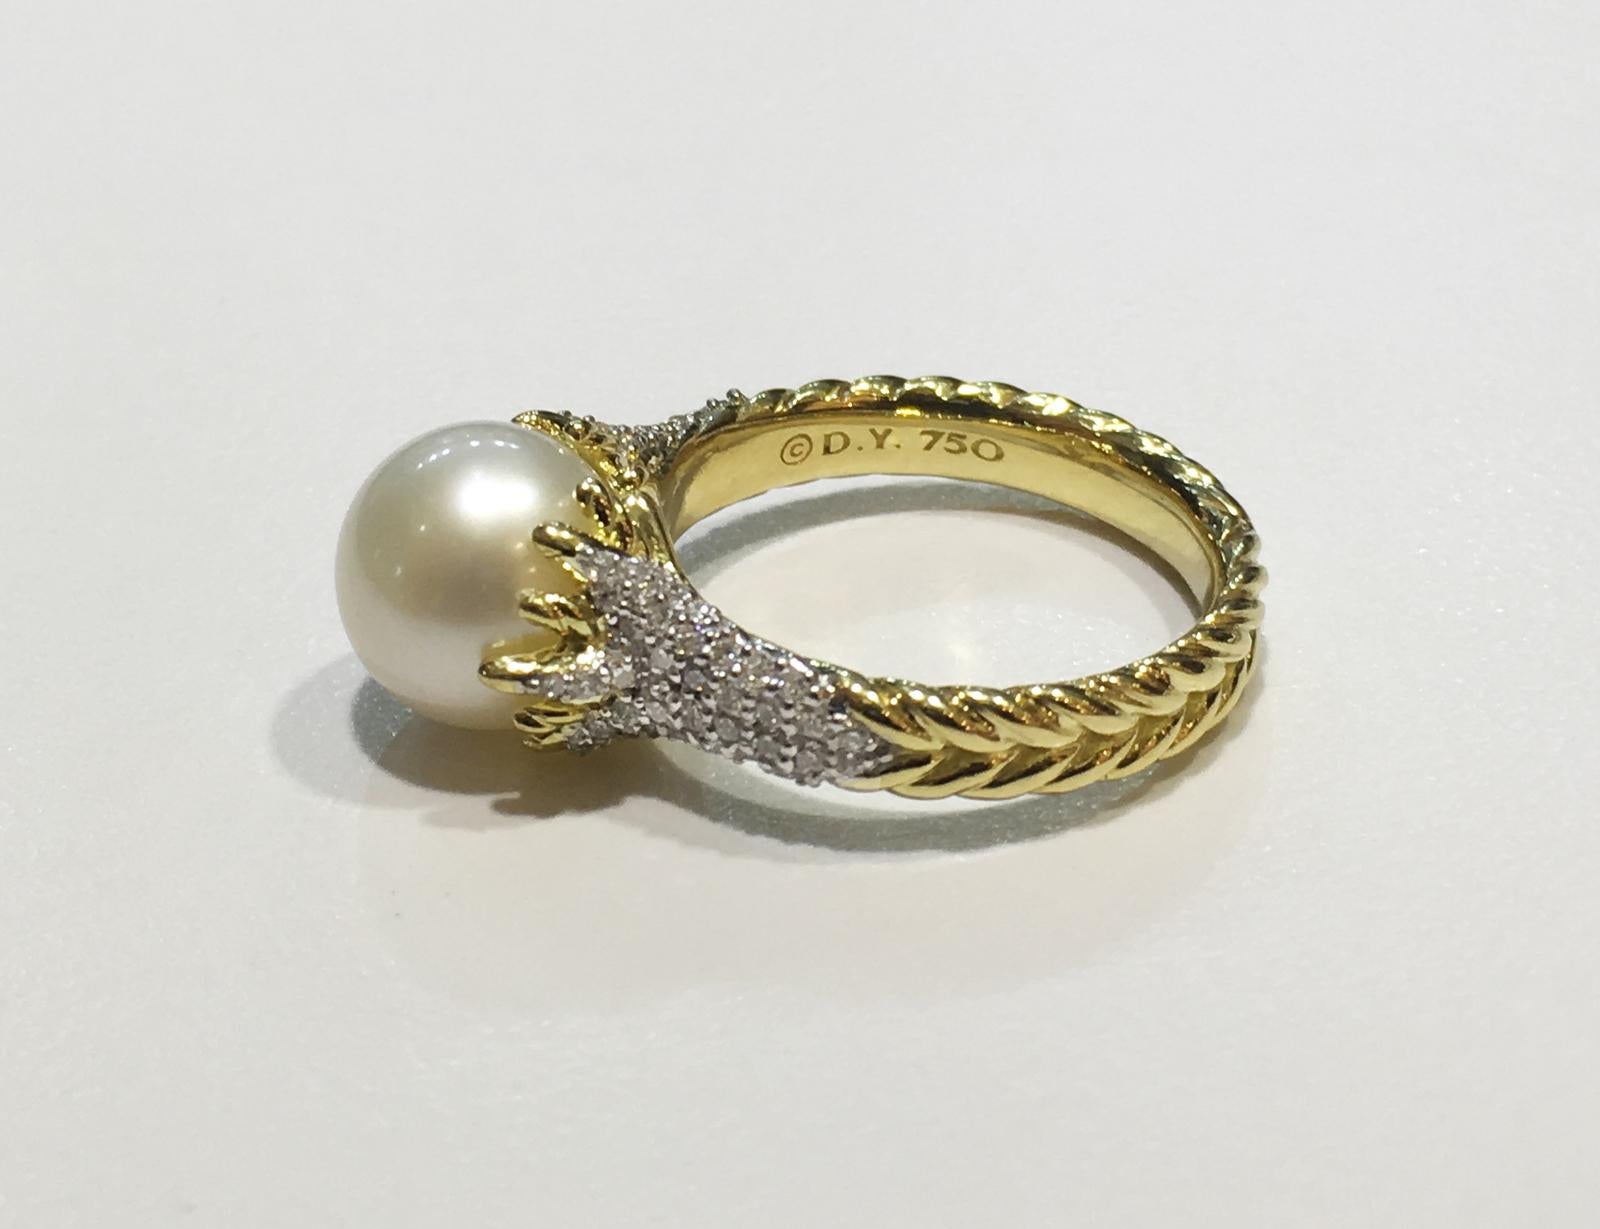 DAVID YURMAN RARE STARBURST PEARL 18K YELLOW GOLD & PAVE DIAMOND RING

-18k Yellow Gold
-Ring size: 7
-Pearl dimension: 9.5mm
-Diamond: 0.317ct

*Comes with David Yurman box.
Original Retail: $2,950